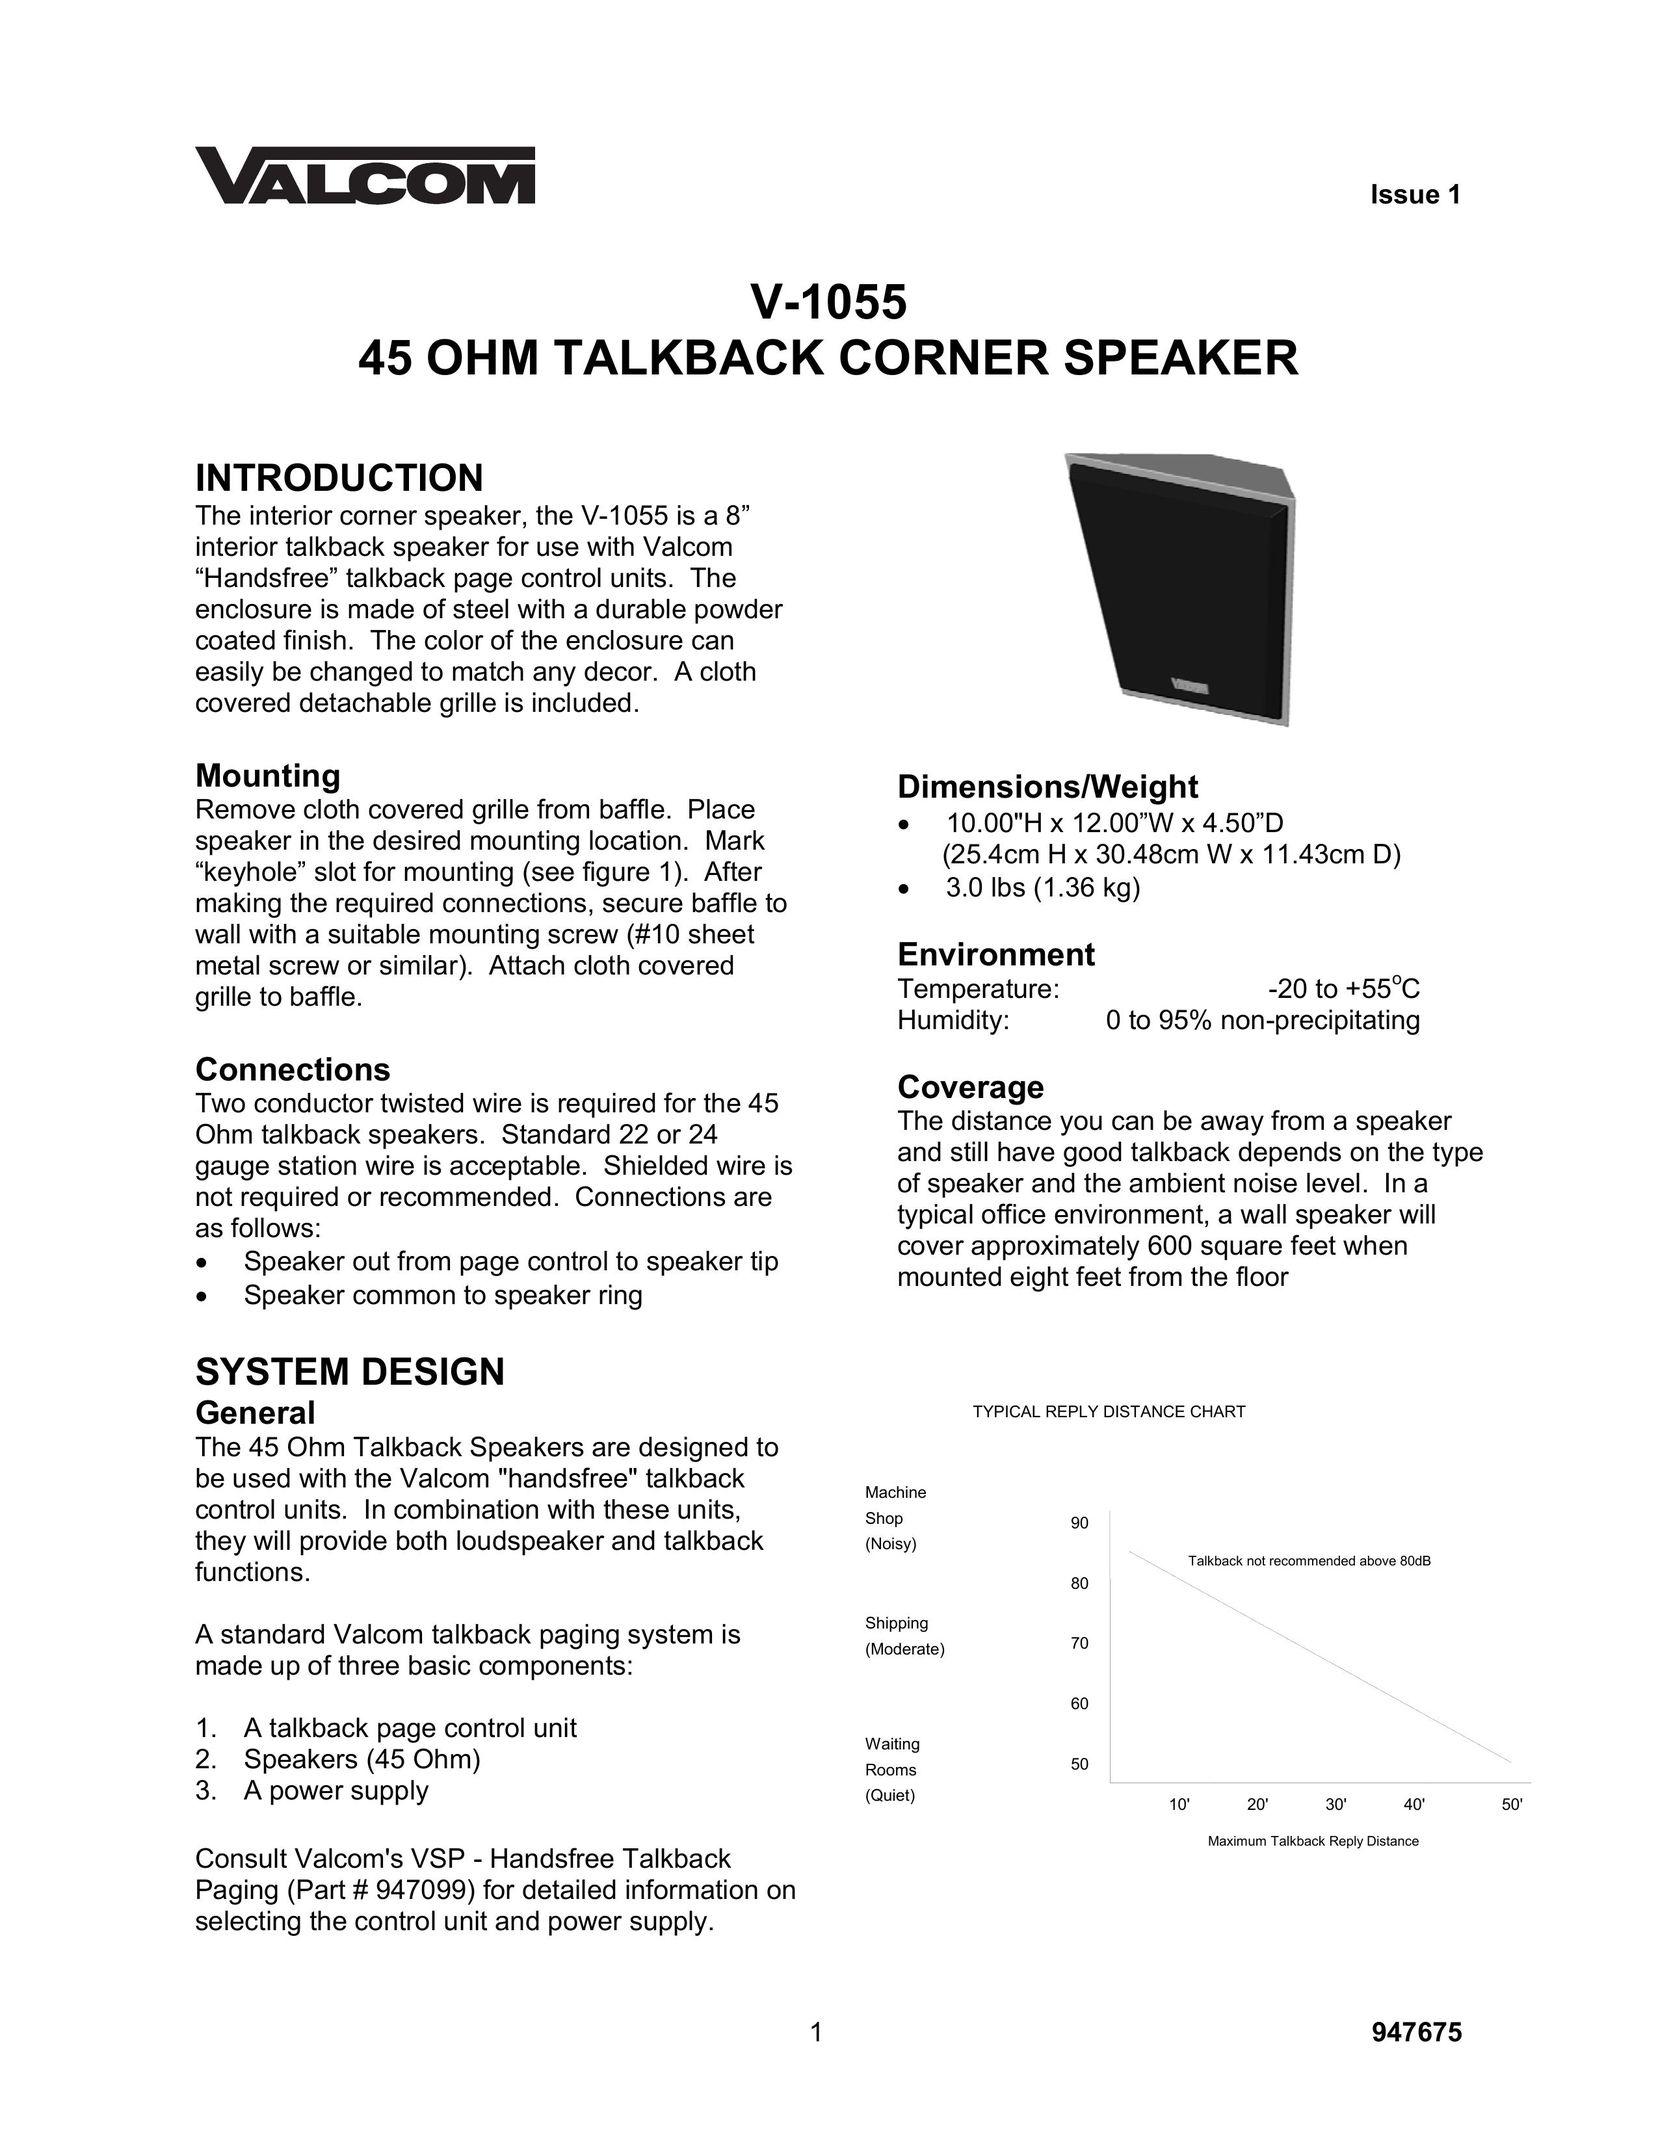 Valcom V-1055 Car Speaker User Manual